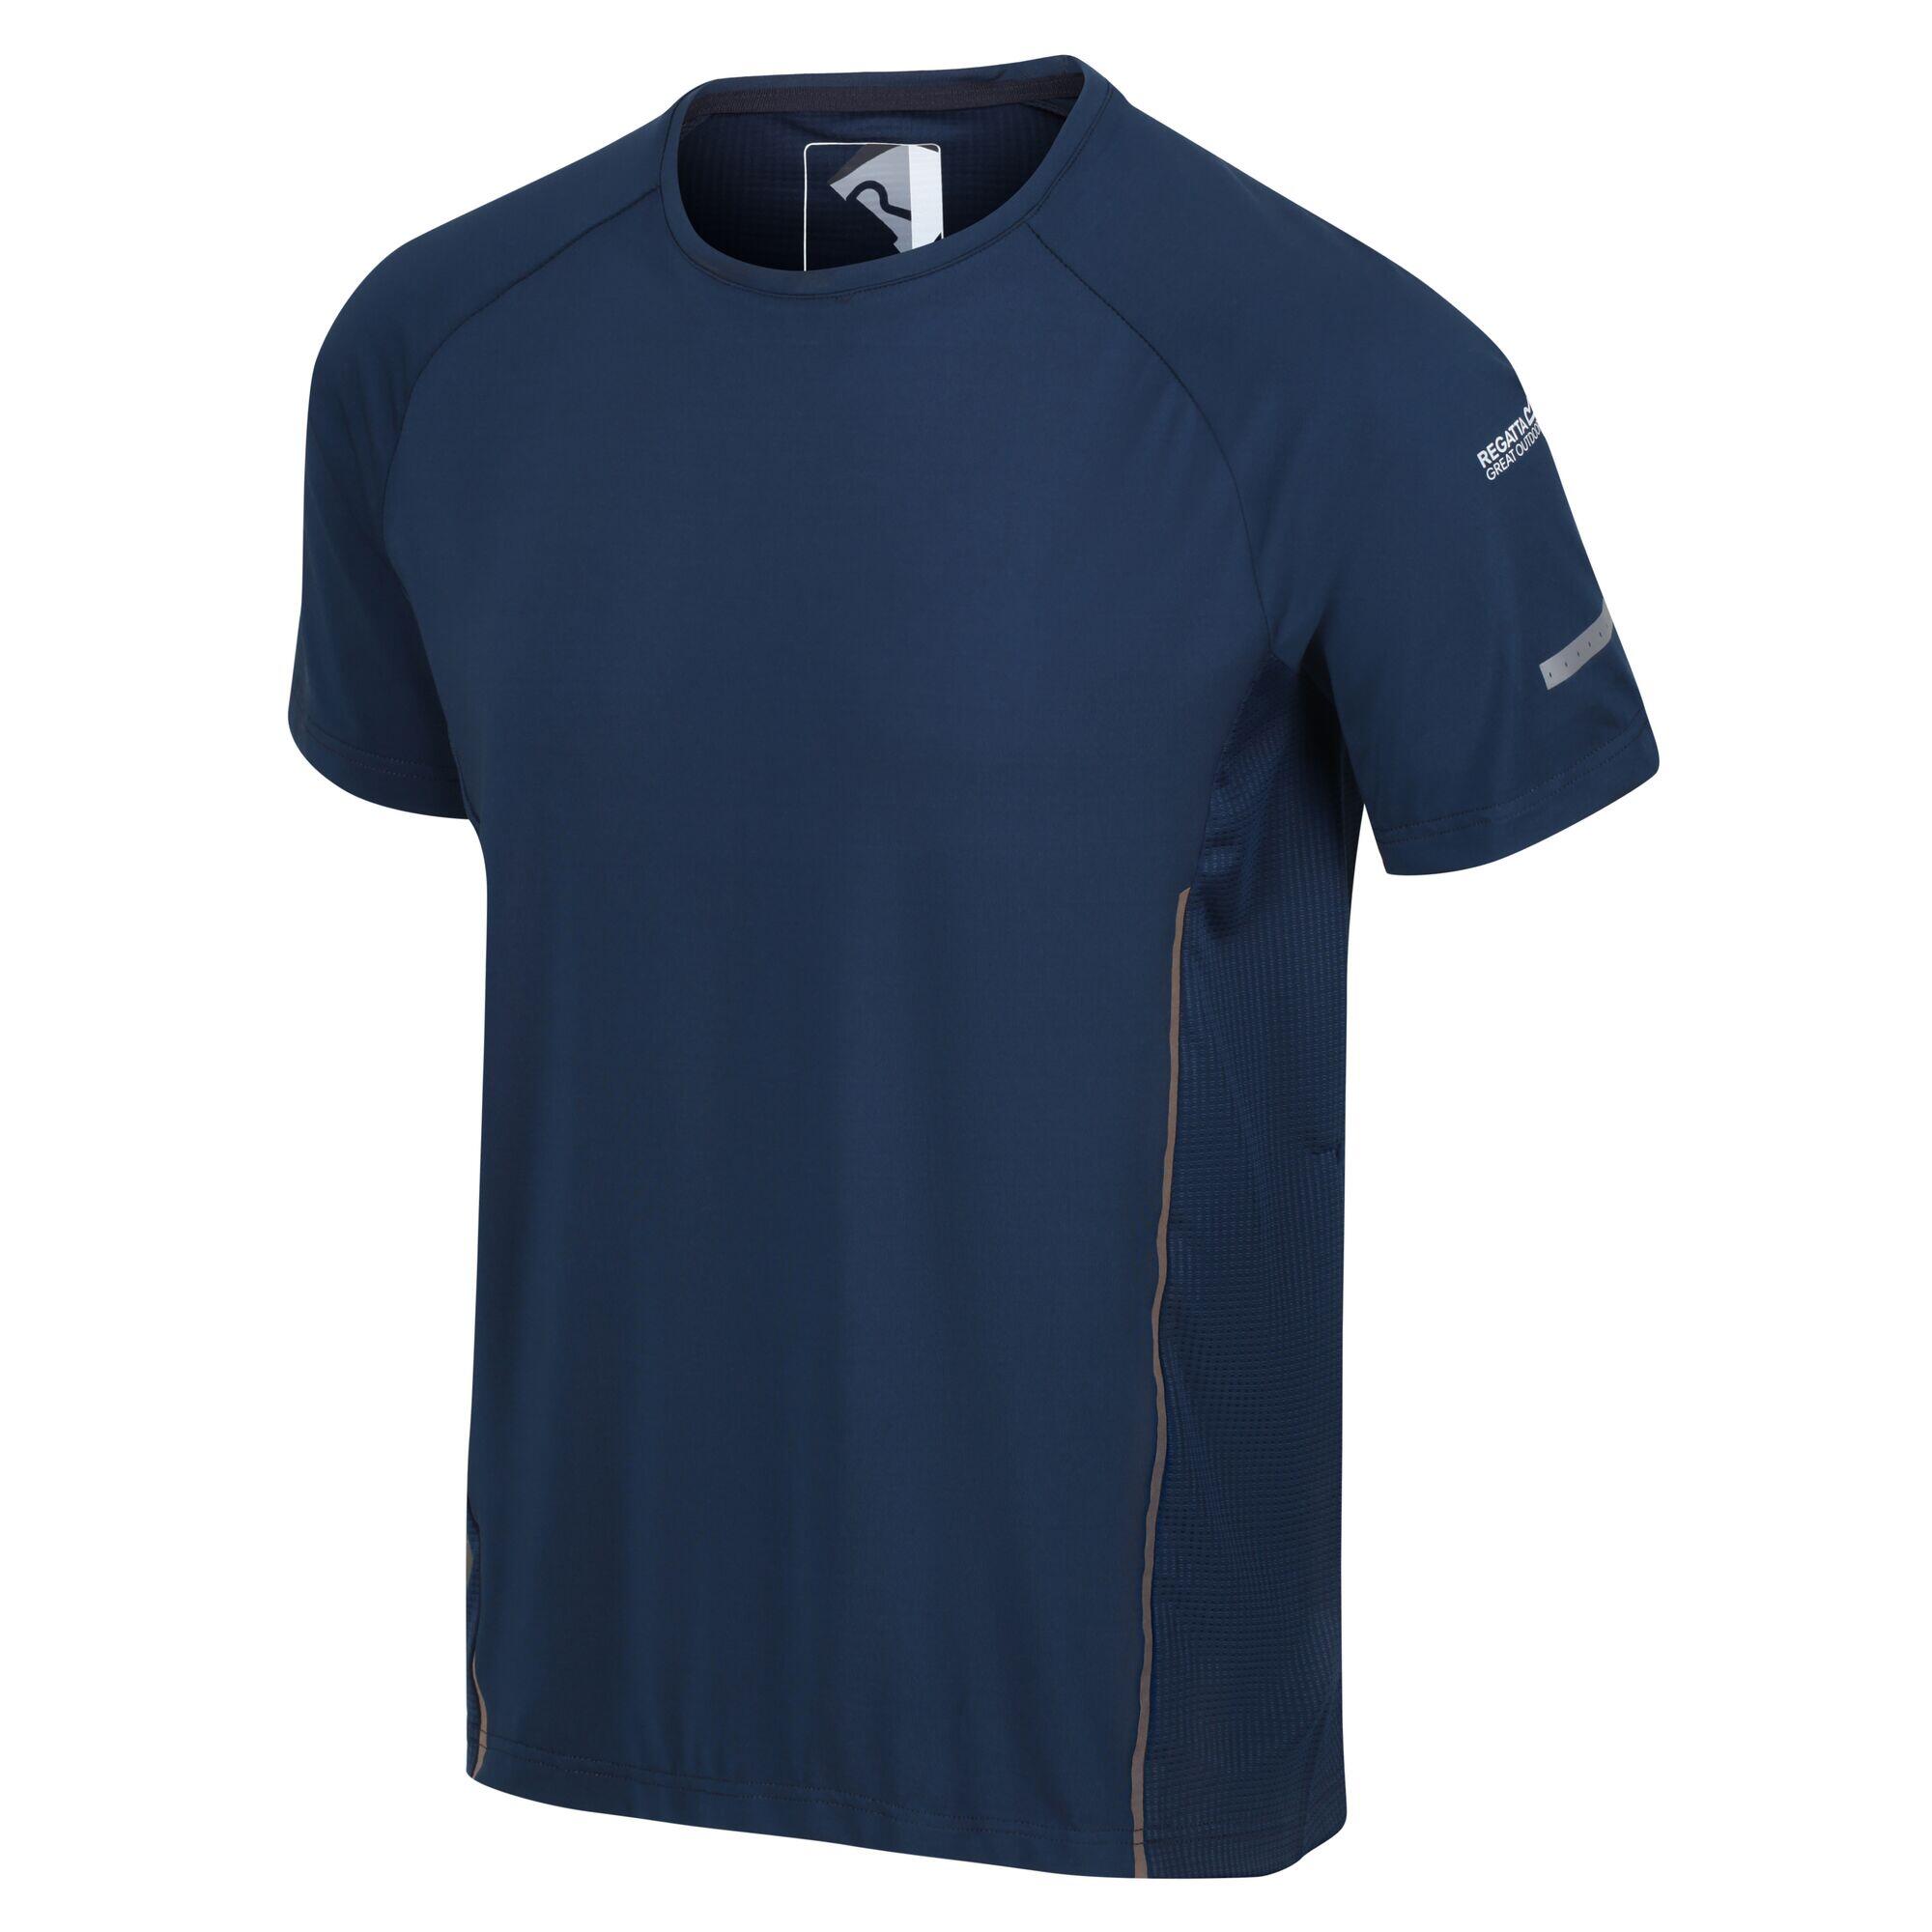 Highton Pro Men's Walking Short Sleeve T-Shirt - Moonlight Denim 4/5